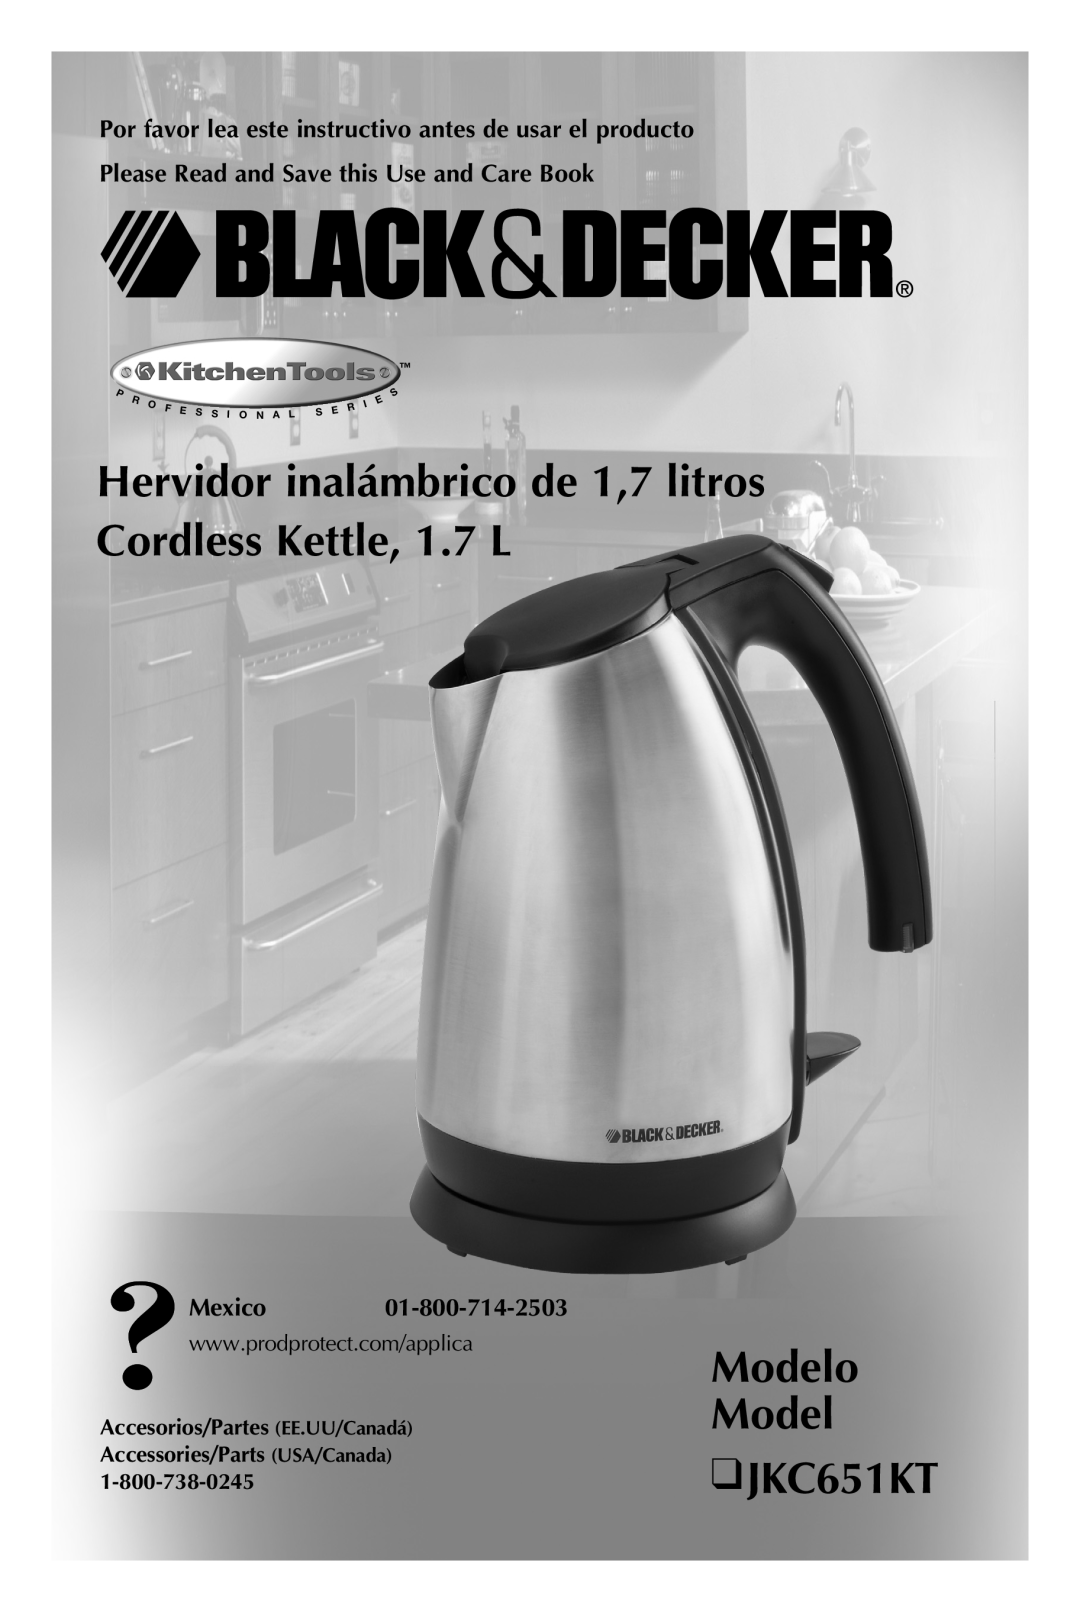 Black & Decker manual Hervidor inalámbrico de 1,7 litros Cordless Kettle, 1.7 L, Modelo Model JKC651KT, Mexico 